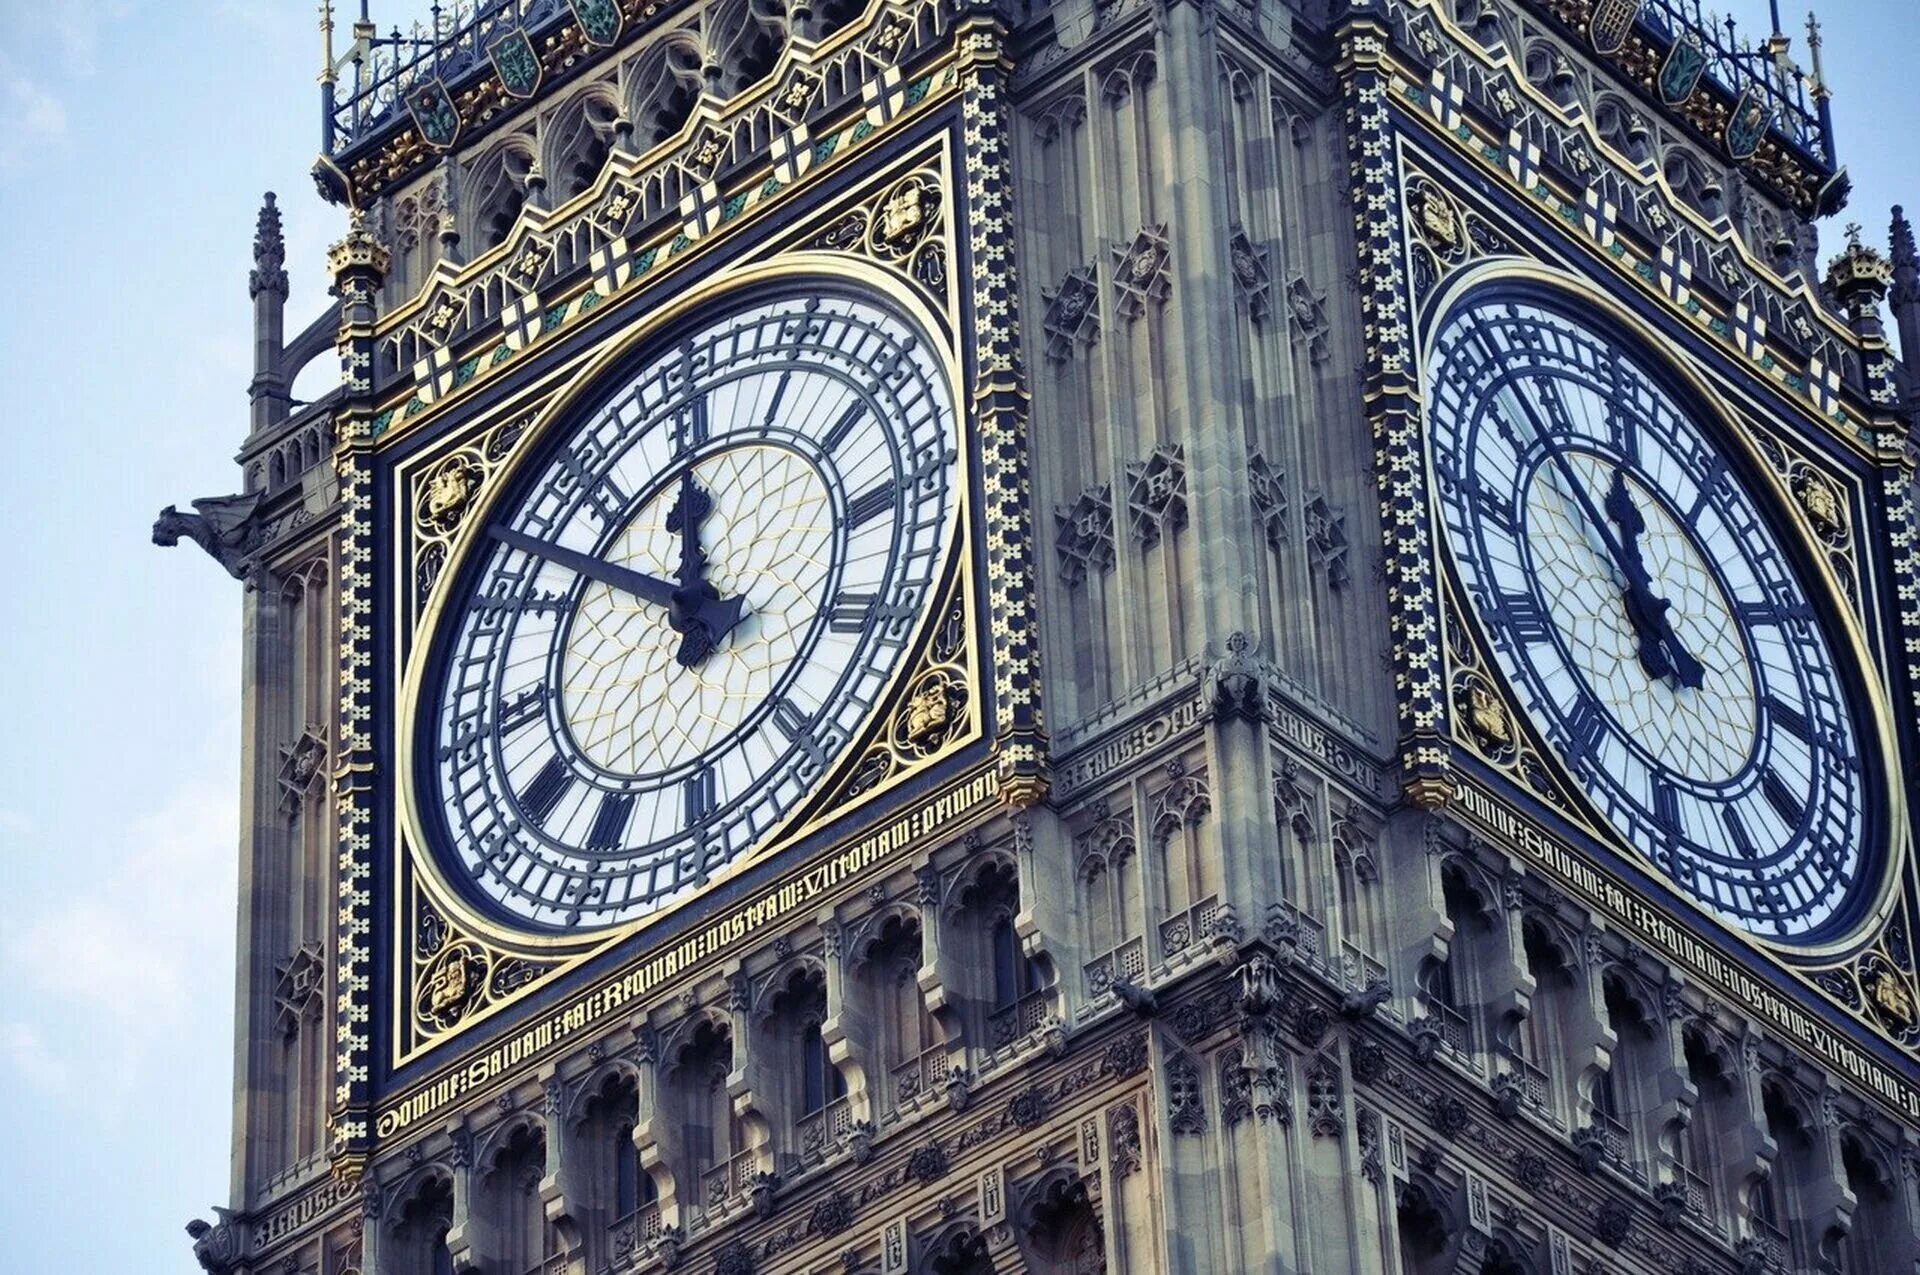 Watching britain. Башня Биг Бен в Лондоне. Биг-Бен (башня Елизаветы). Часовая башня Вестминстерского дворца. Биг Бэн часы в Англии.